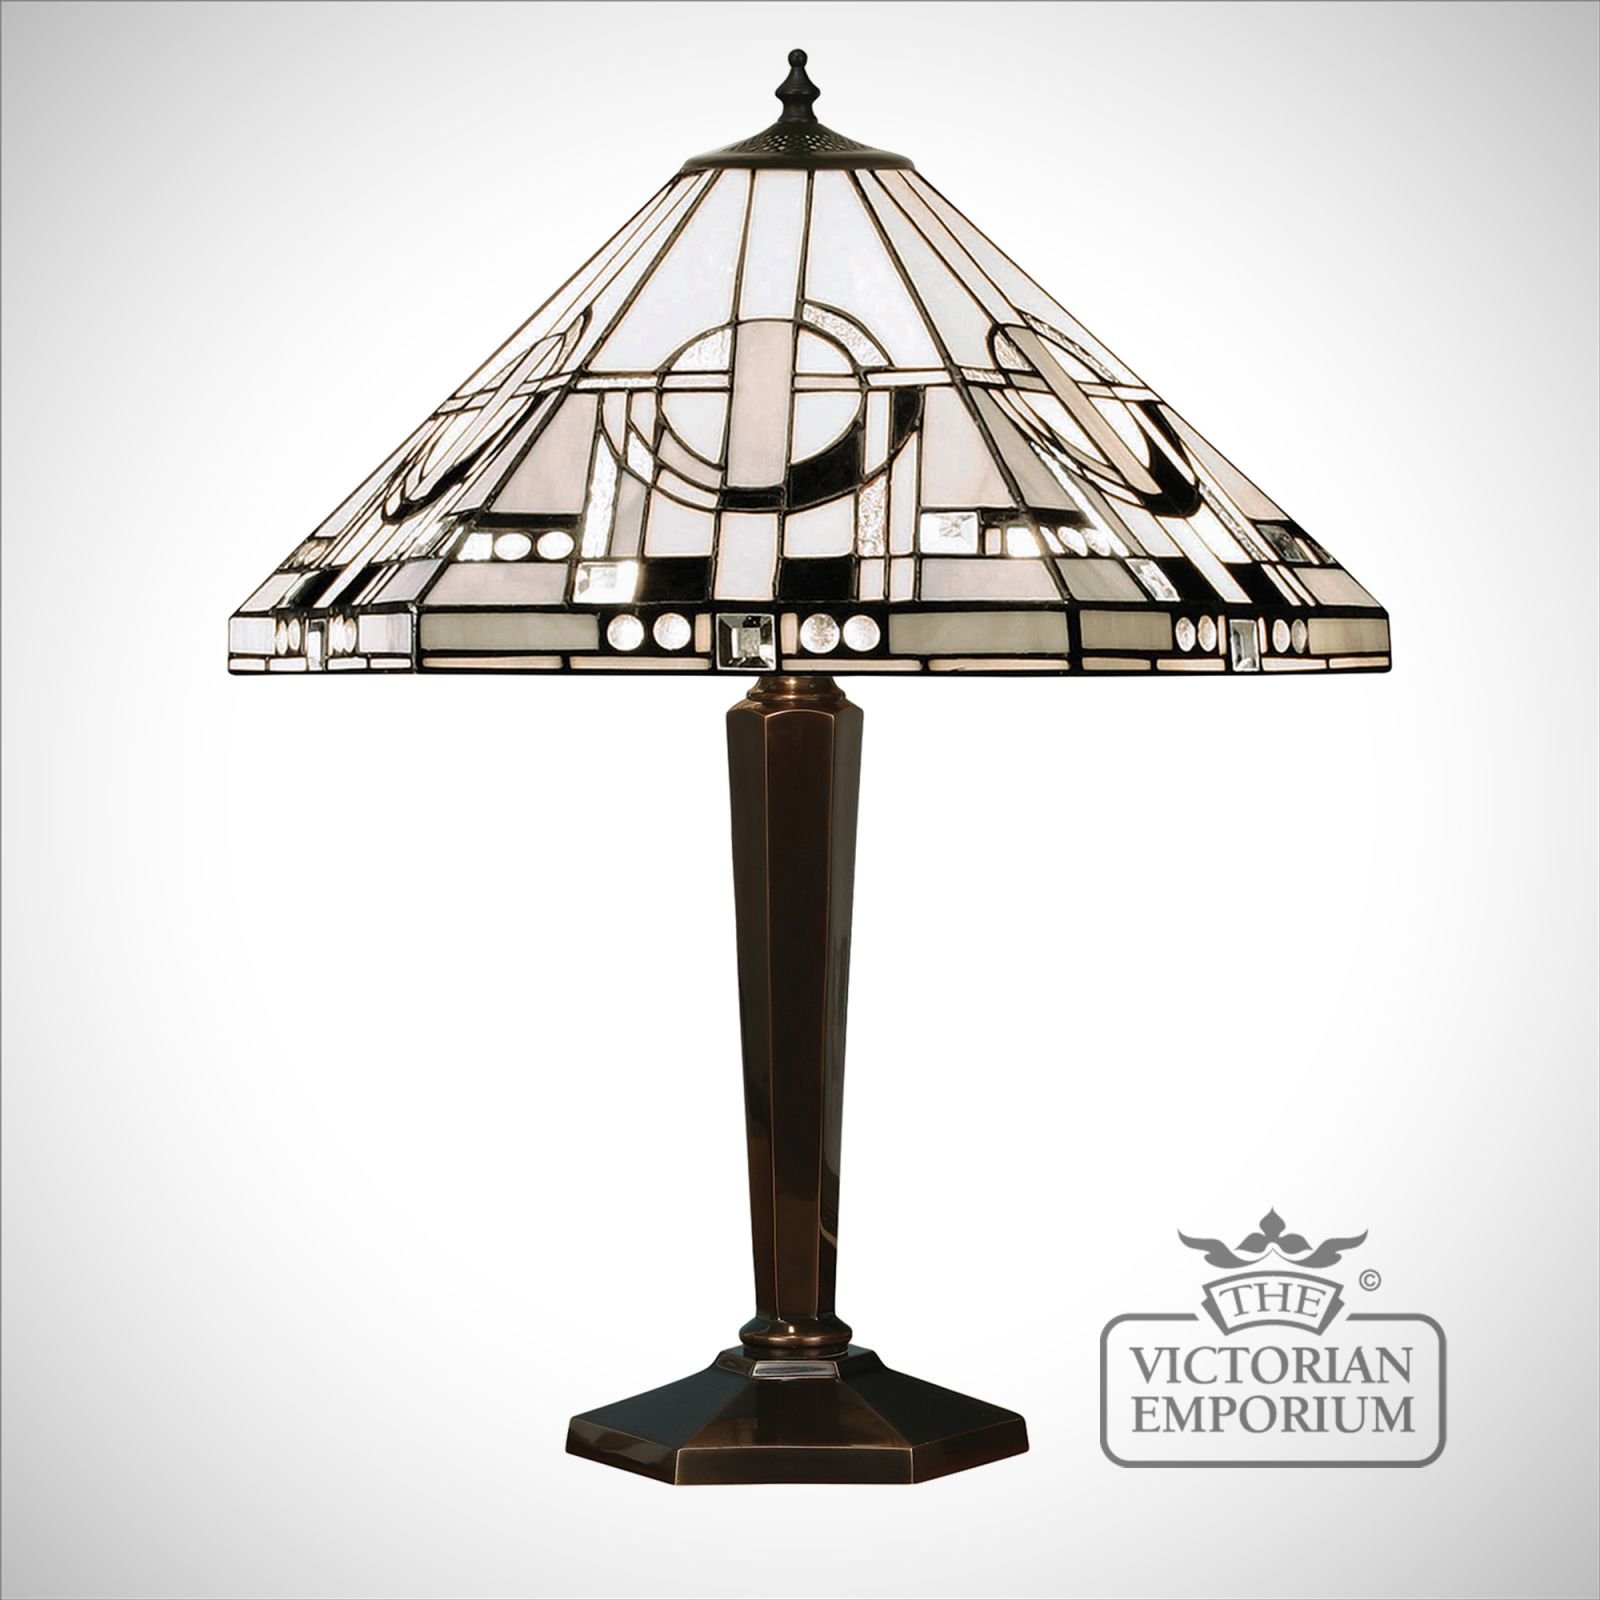 Metropolitan medium table lamp in bronze or aluminium